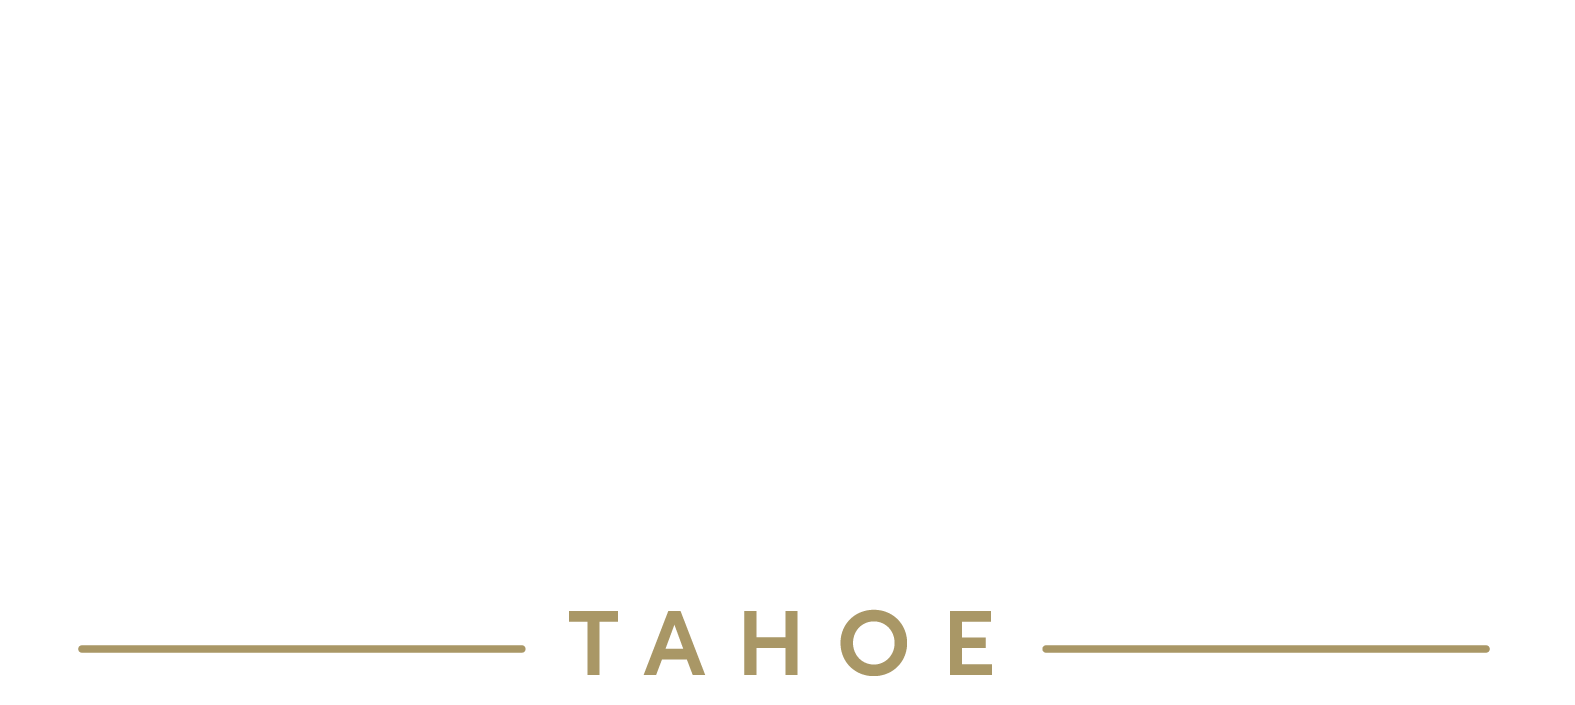 Morrison Group Tahoe